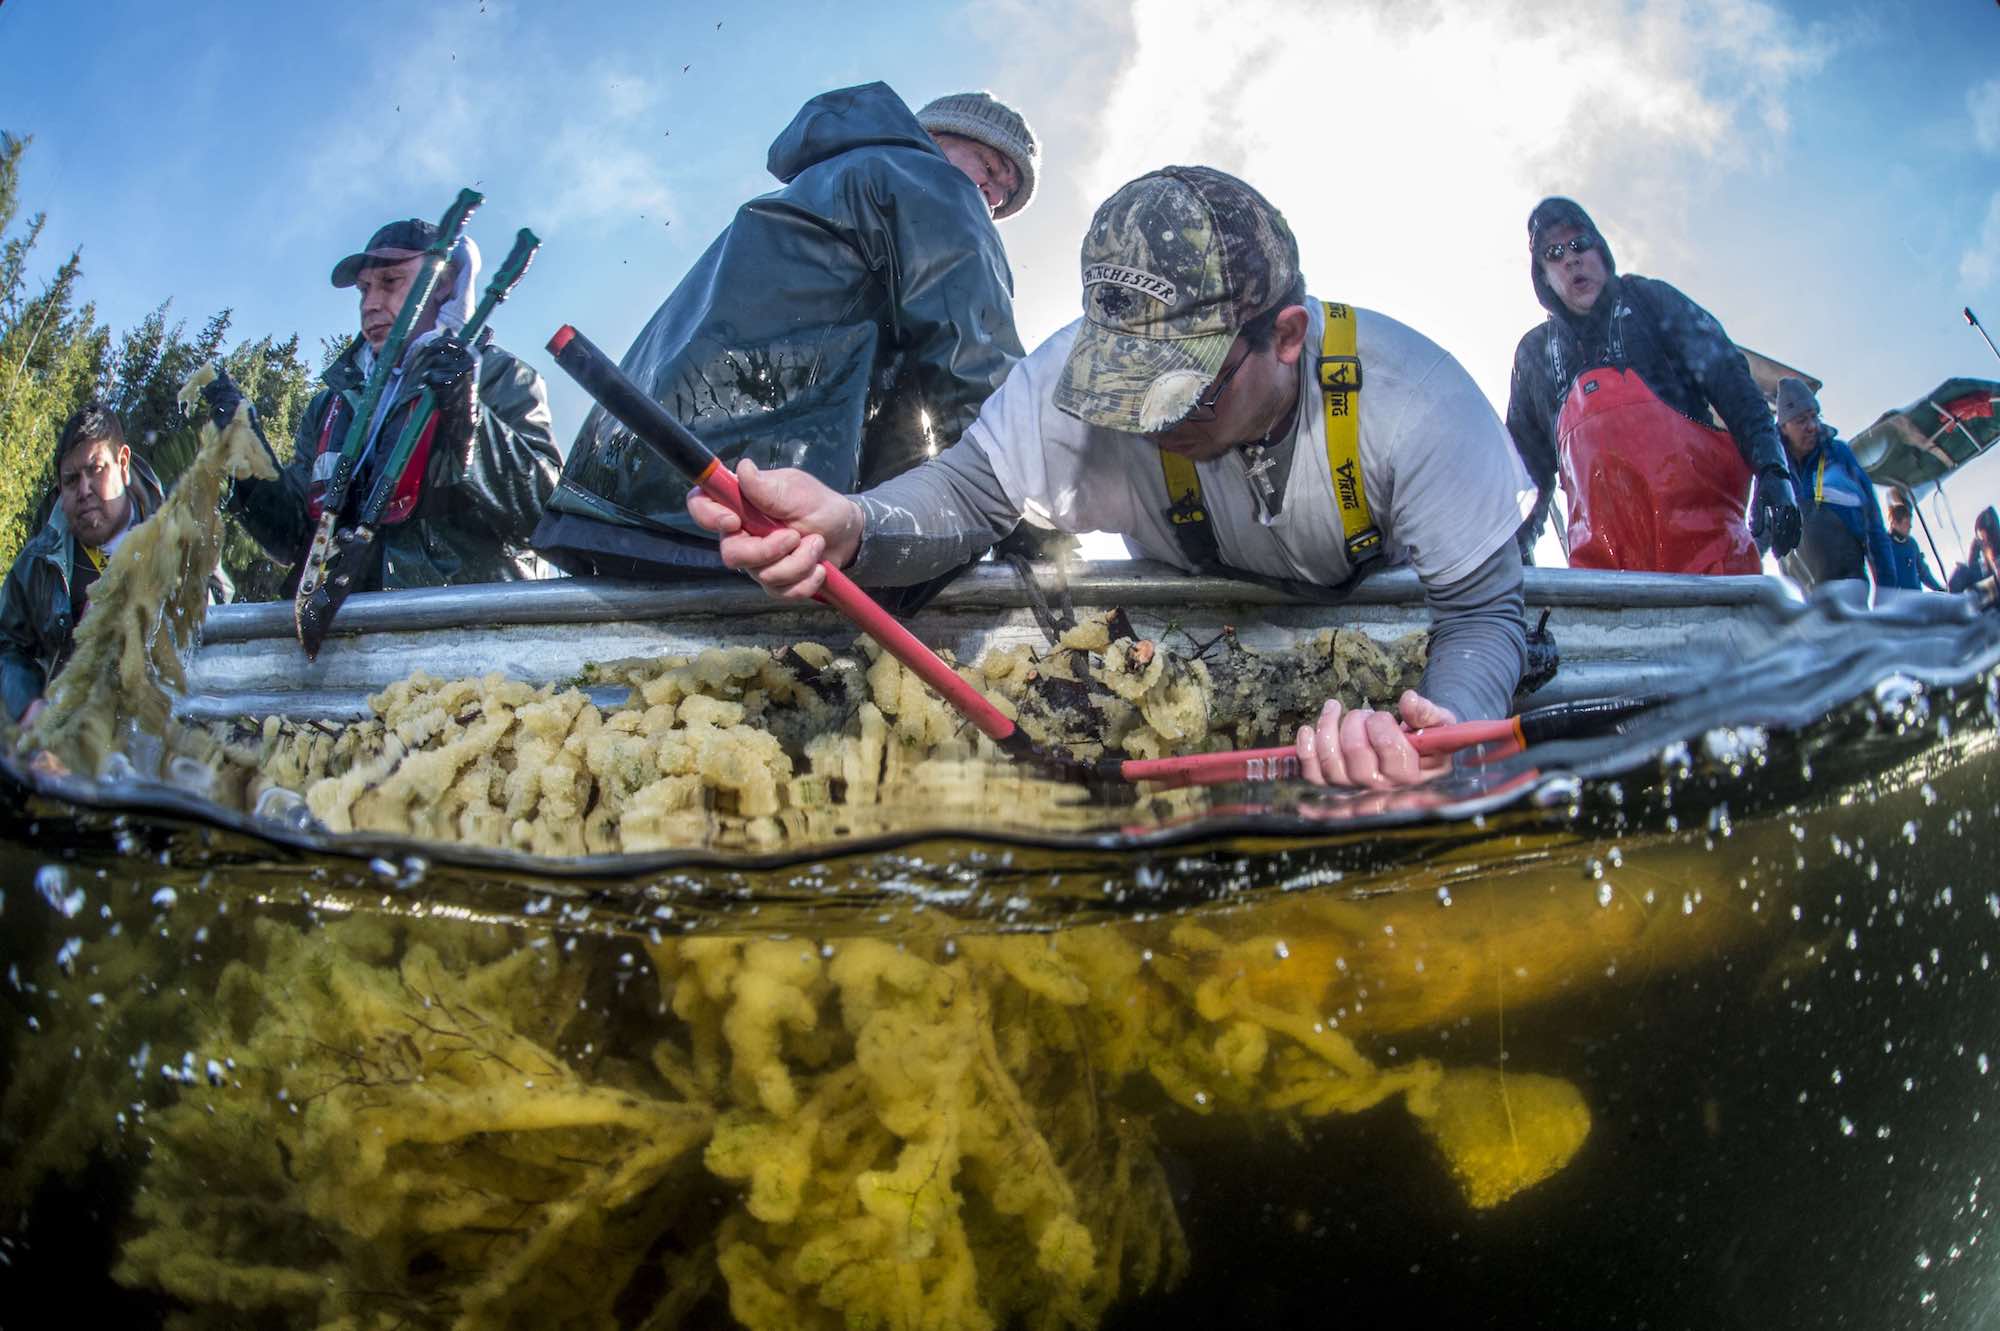 Heiltsuk fishermen harvesting herring spawn on kelp. Photo by Ian McAllister/Pacific Wild